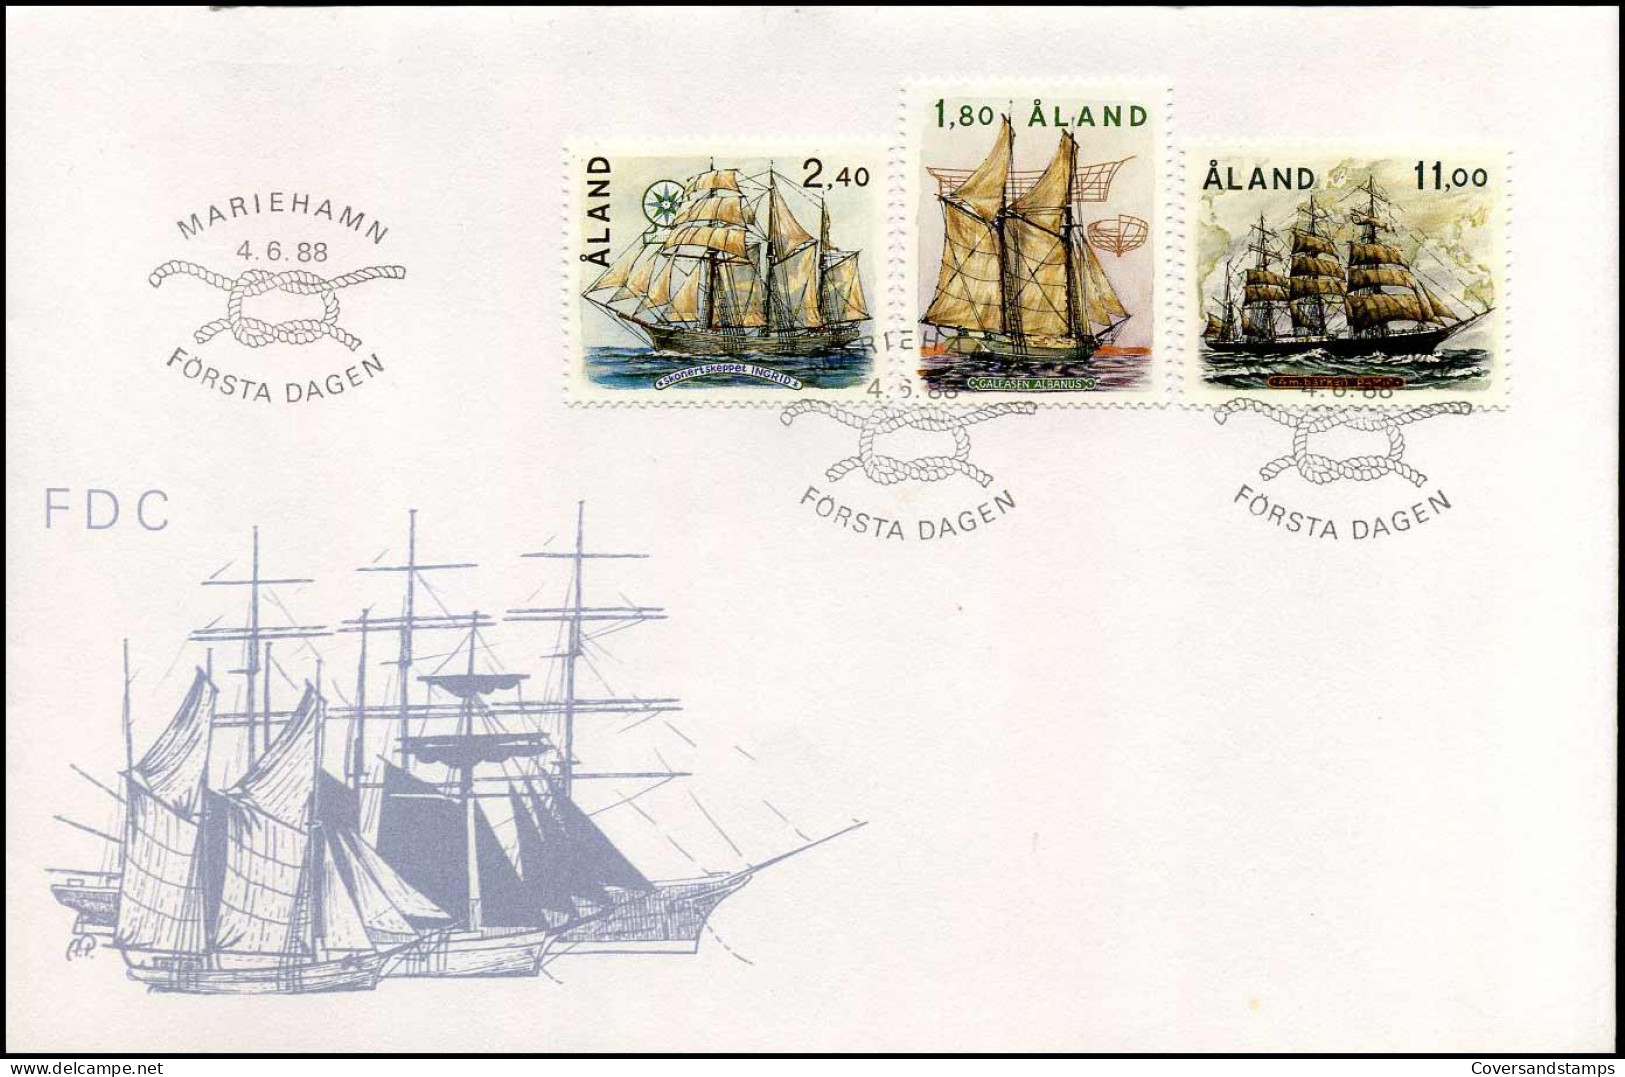 FDC - Aland - Sailing Ships - Aland